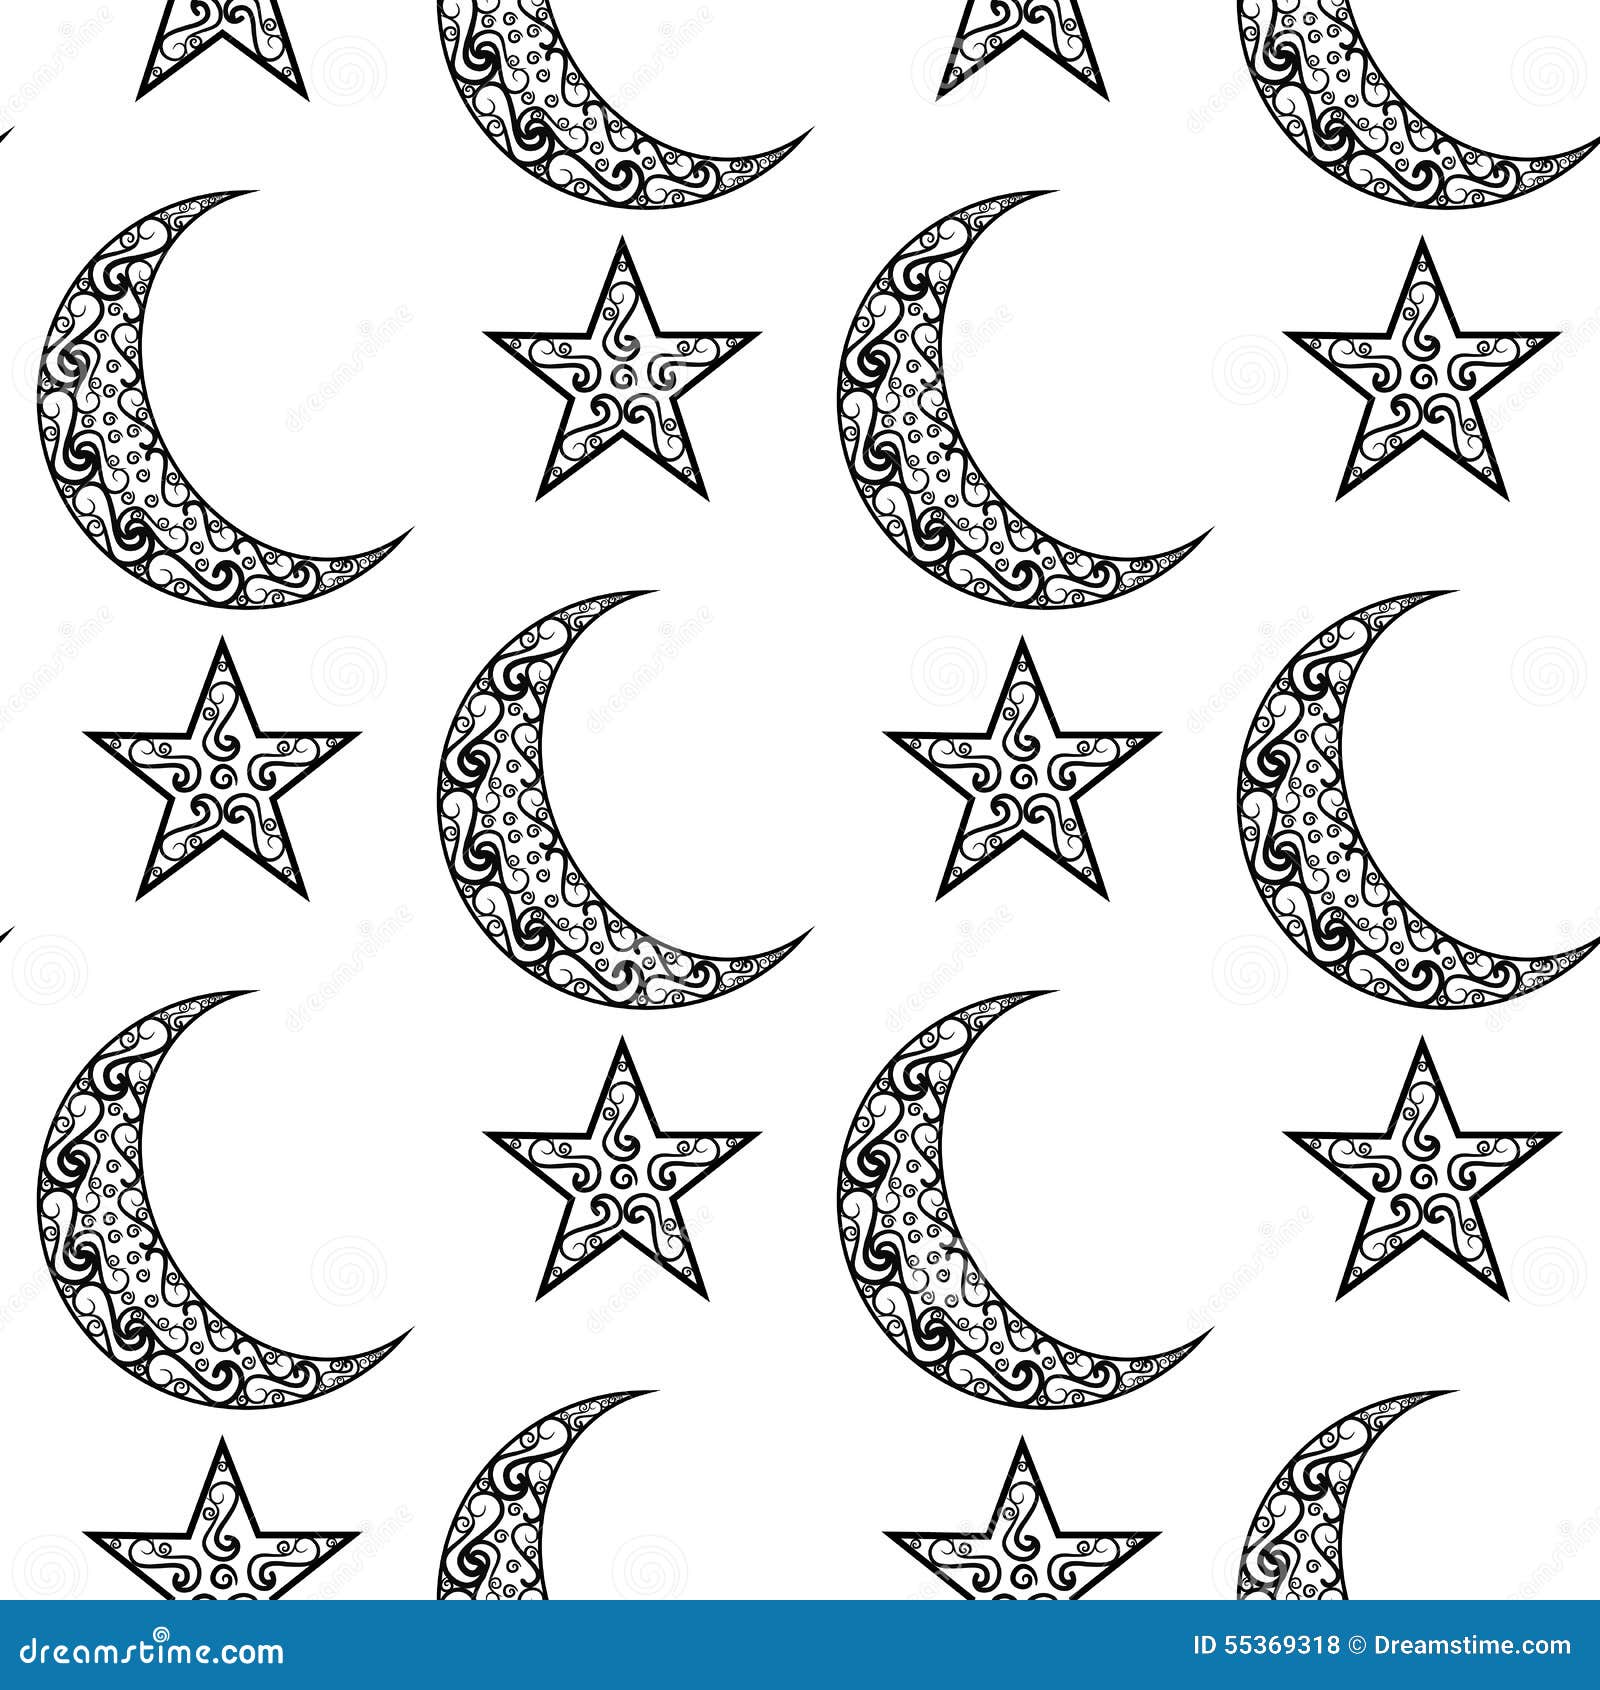 crescent-moon-and-star-printable-template-printable-templates